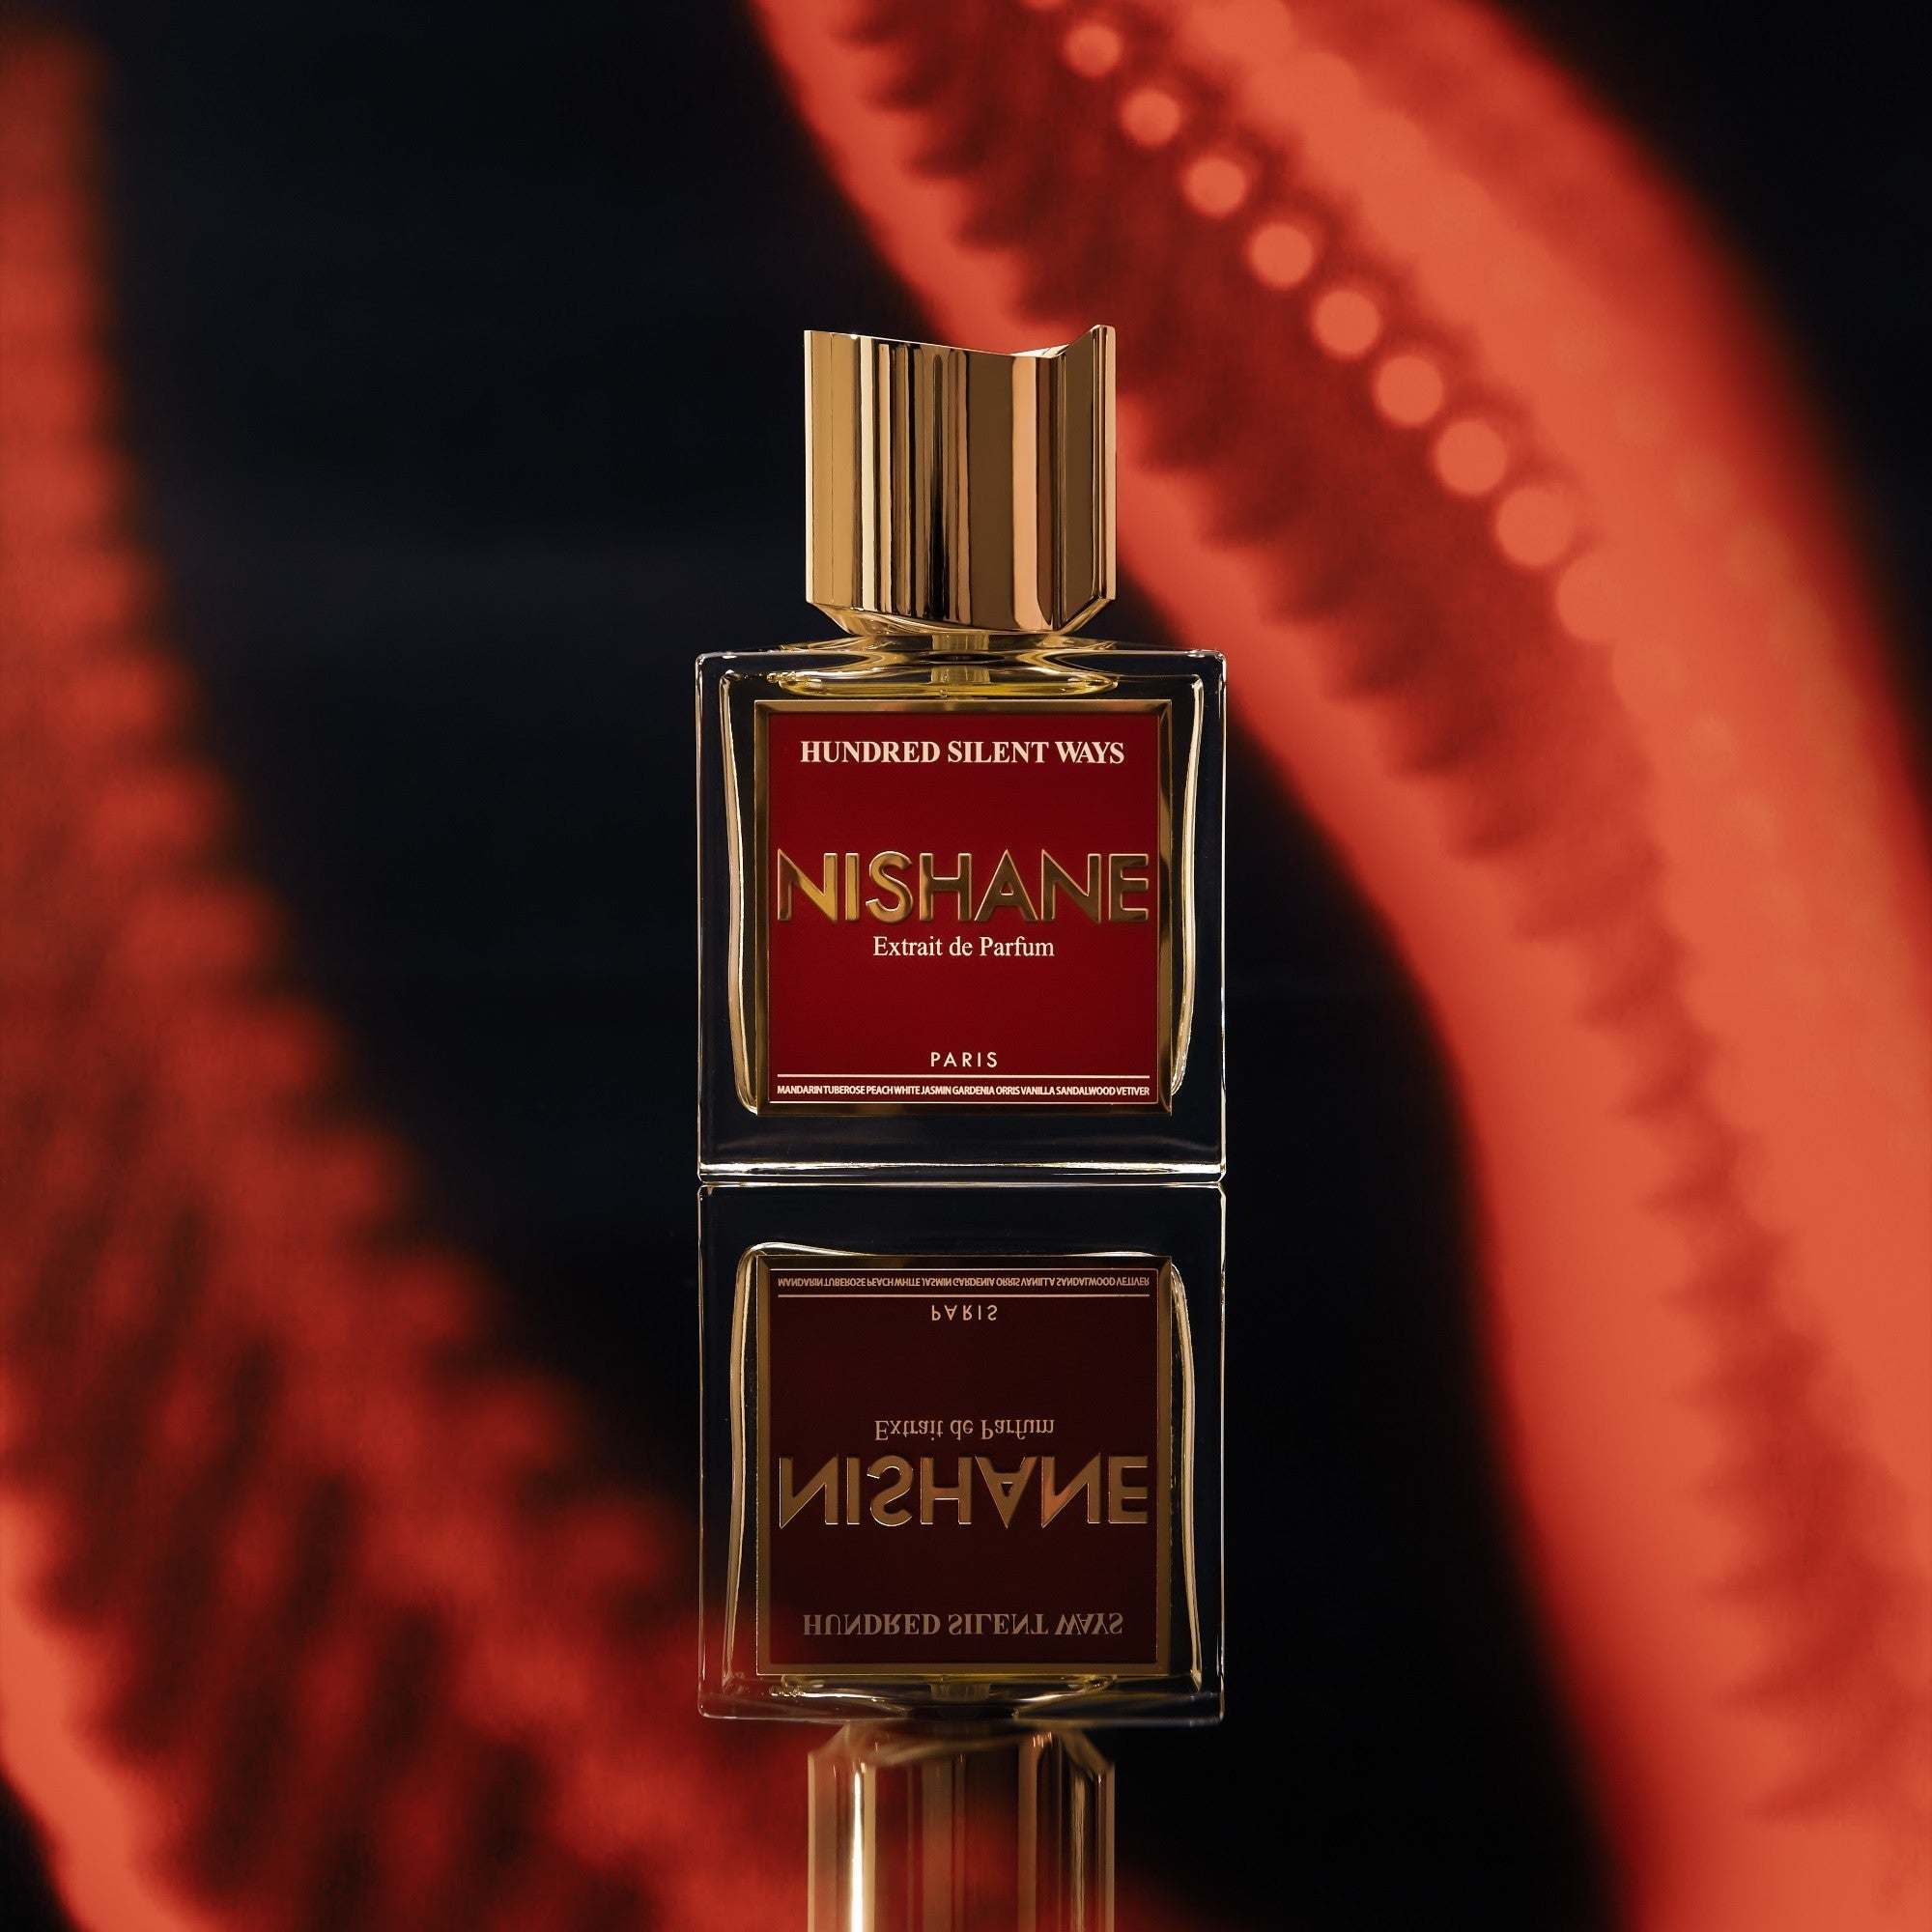 Nishane Hundred Silent Ways Hand Cream | My Perfume Shop Australia